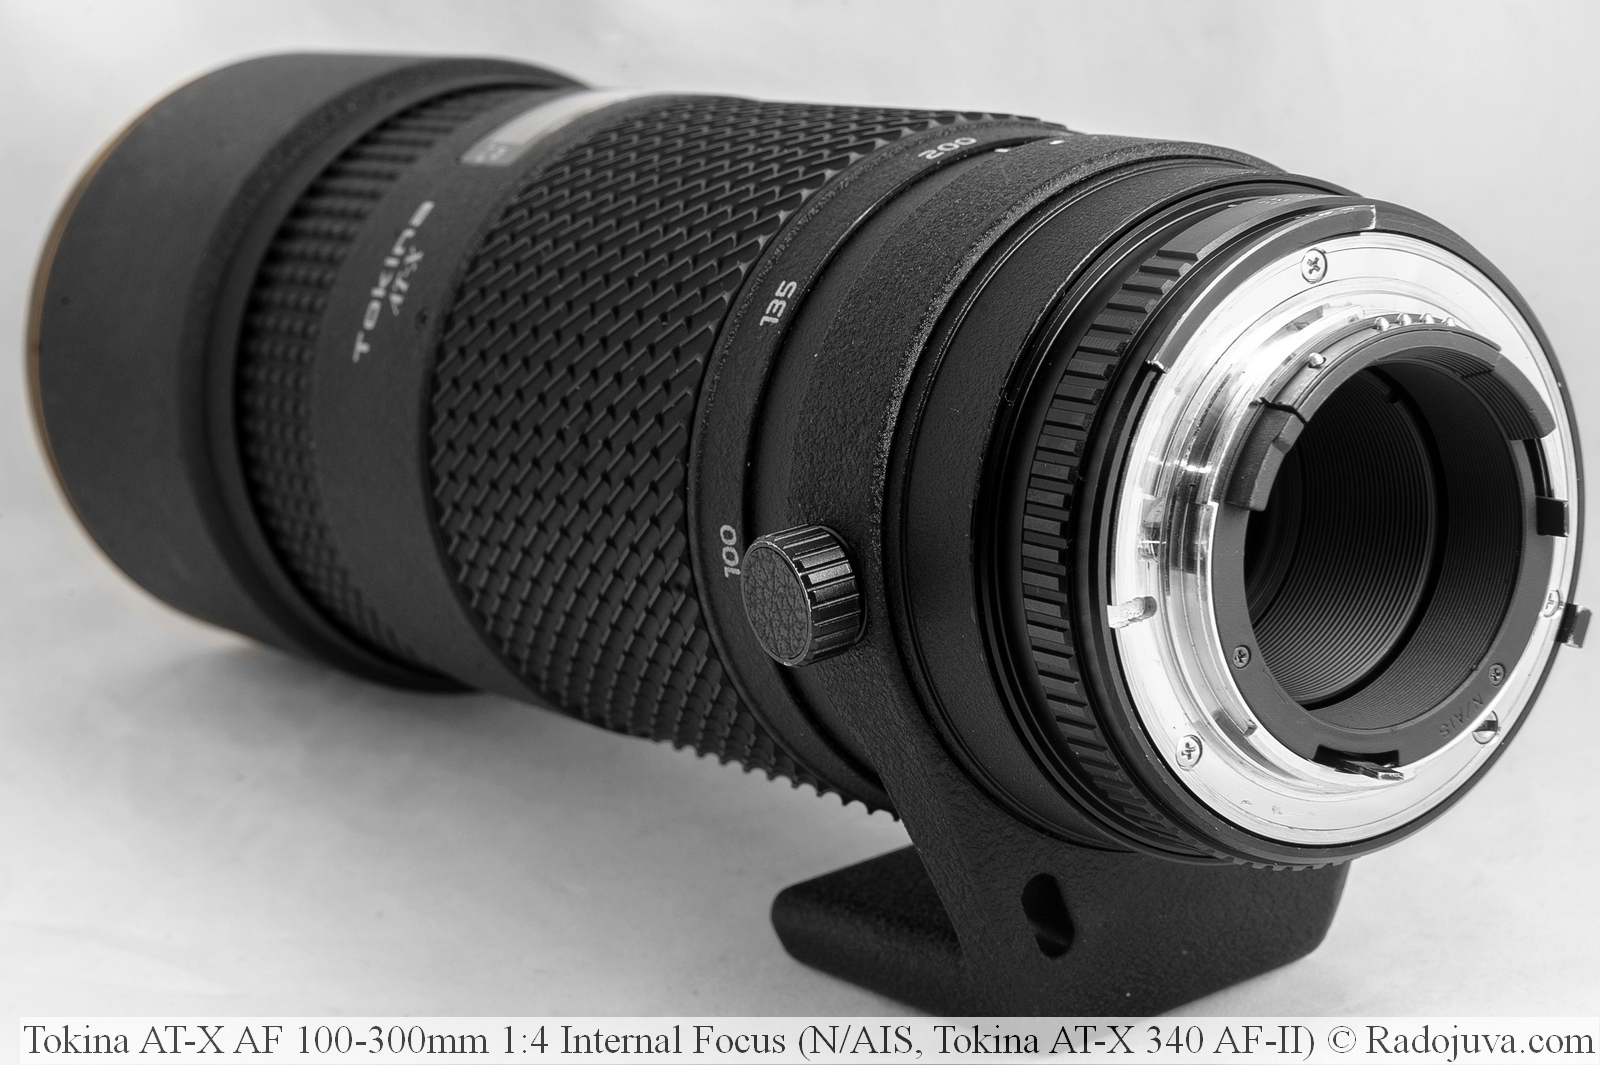 Review Tokina AT-X 340 AF-II 100-300mm F4 Internal Focus | Happy